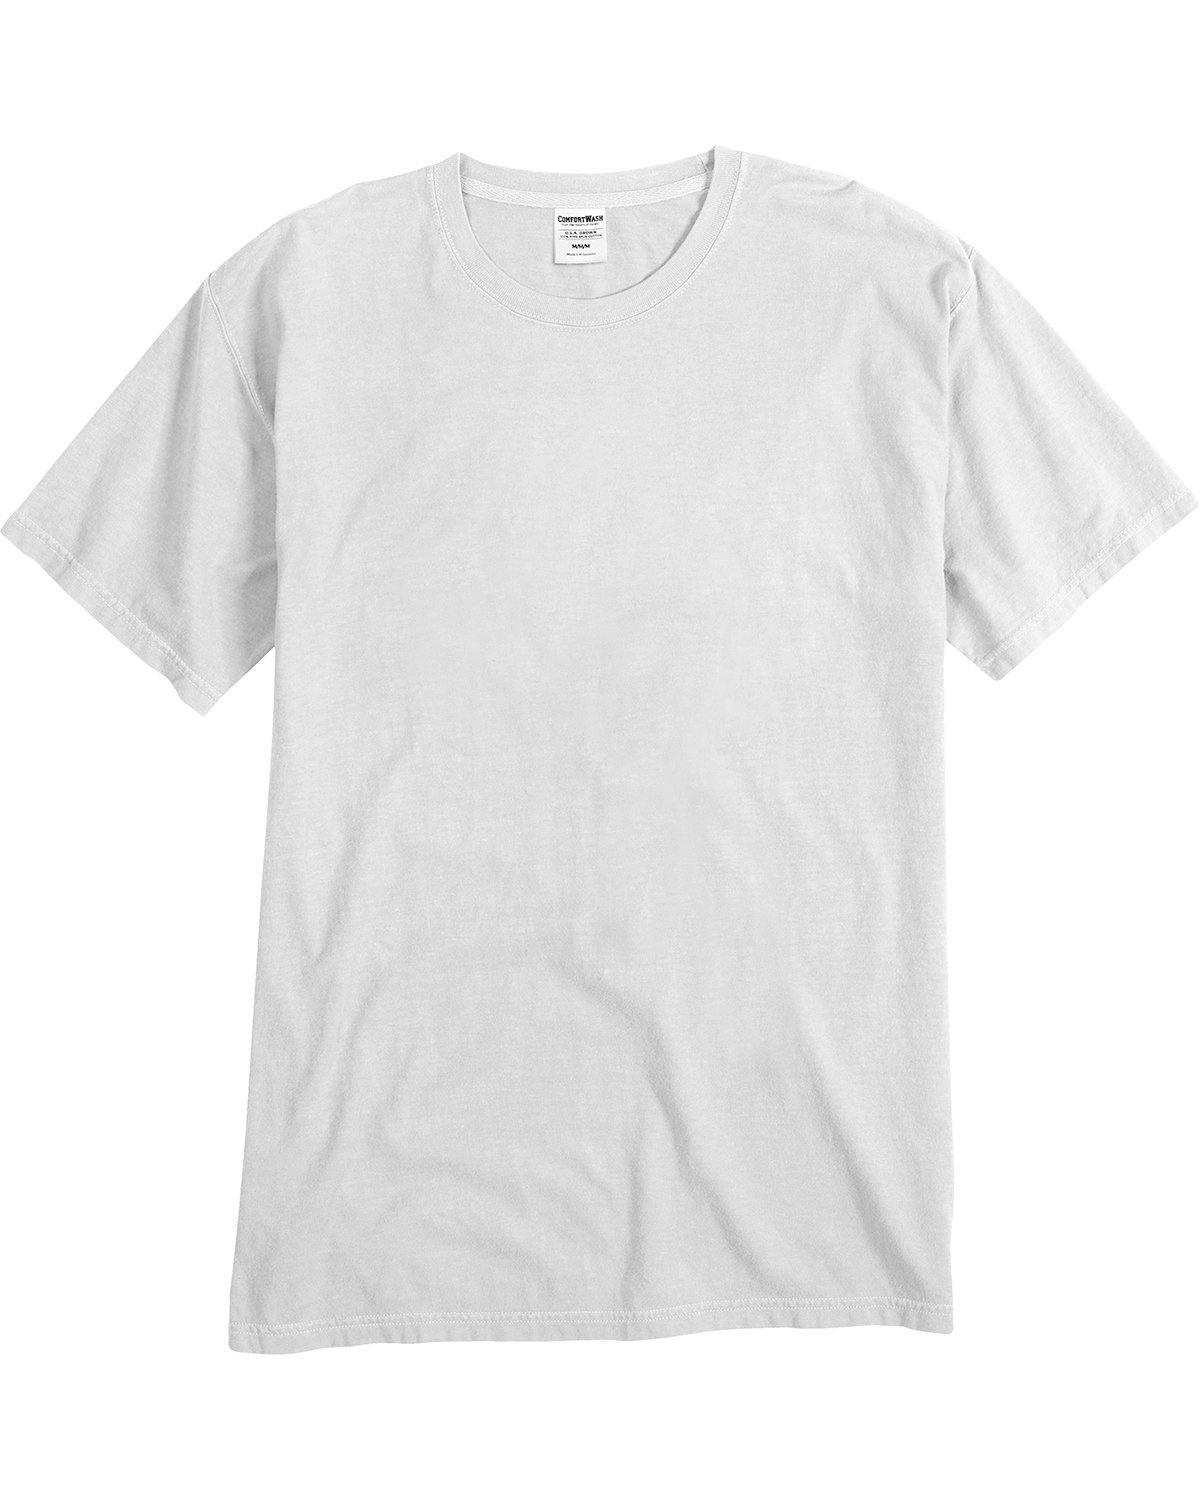 Image for Men's Garment-Dyed T-Shirt